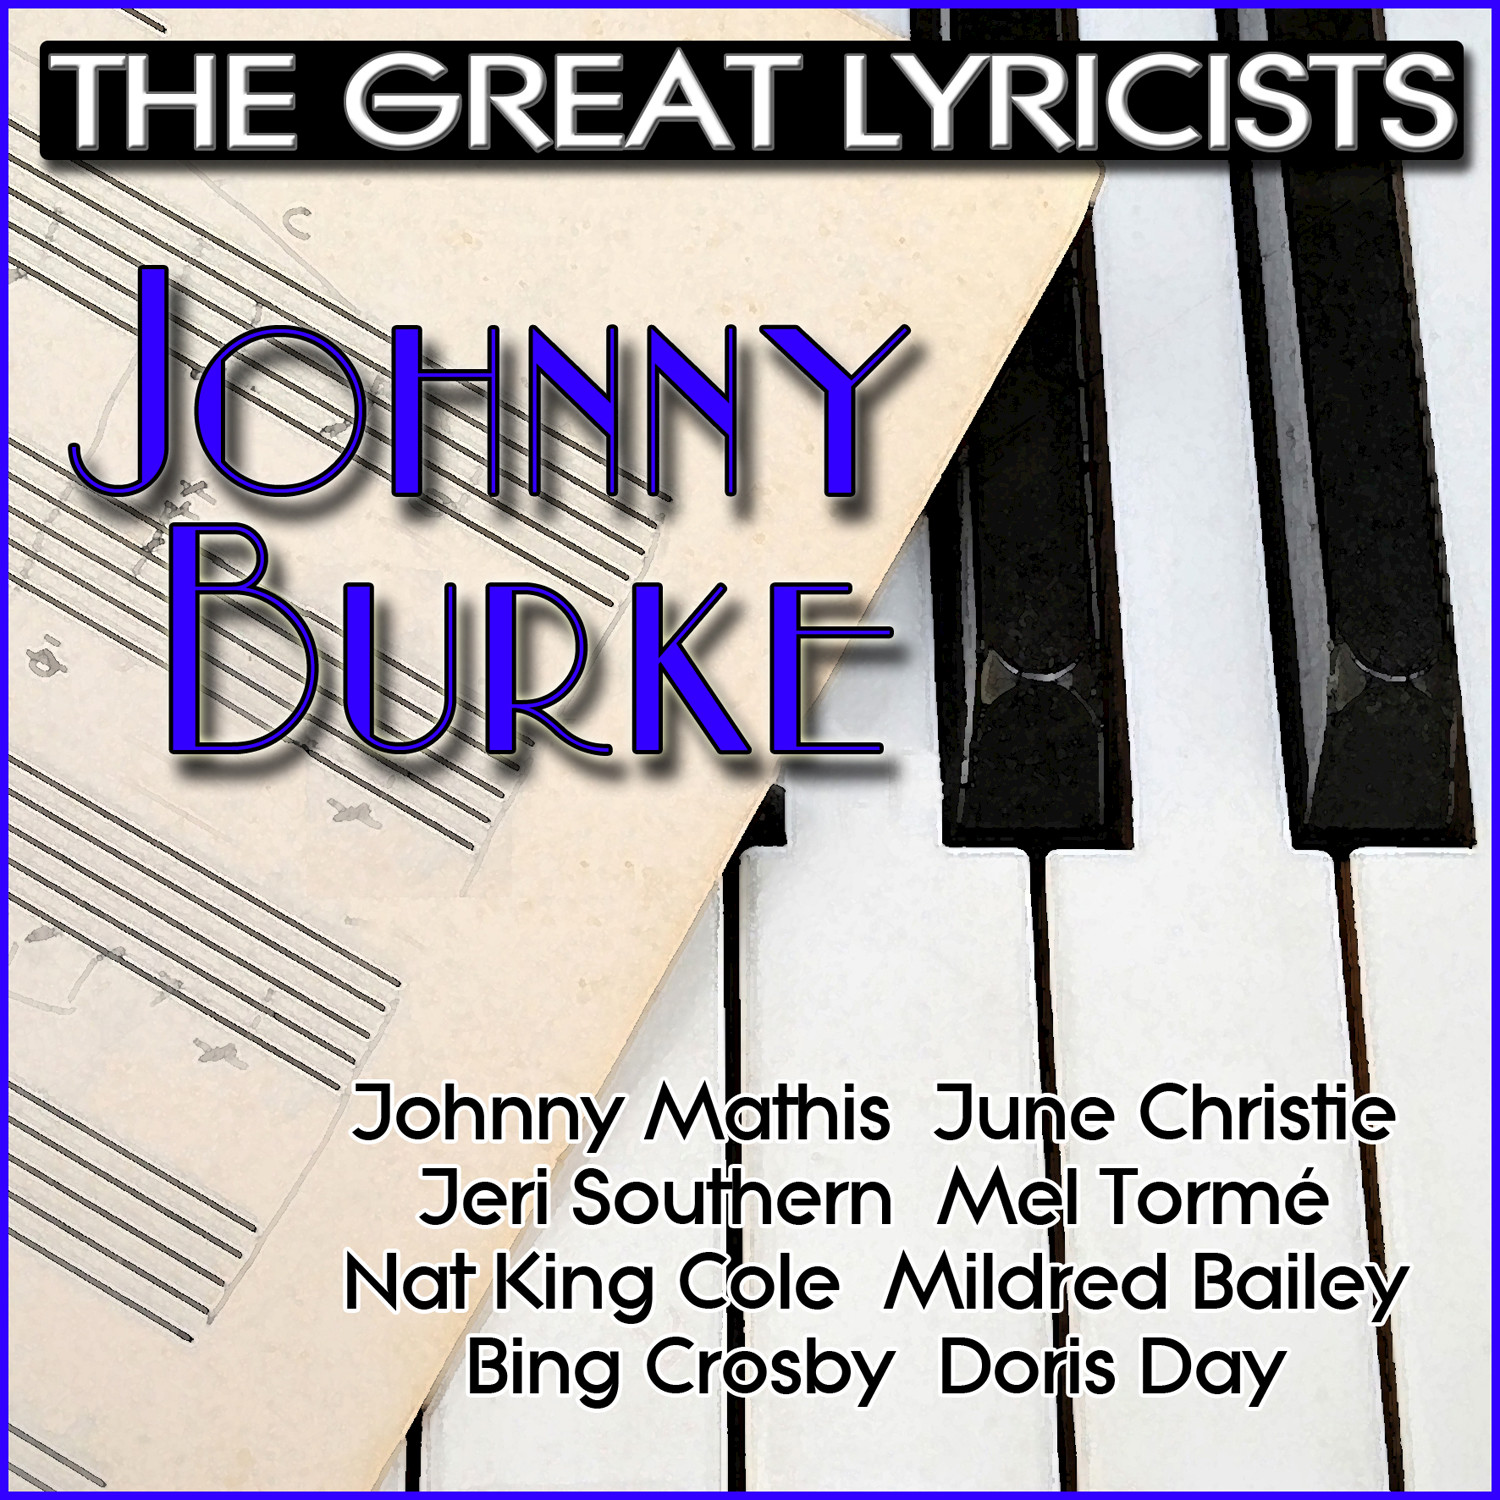 The Great Lyricists  Johnny Burke